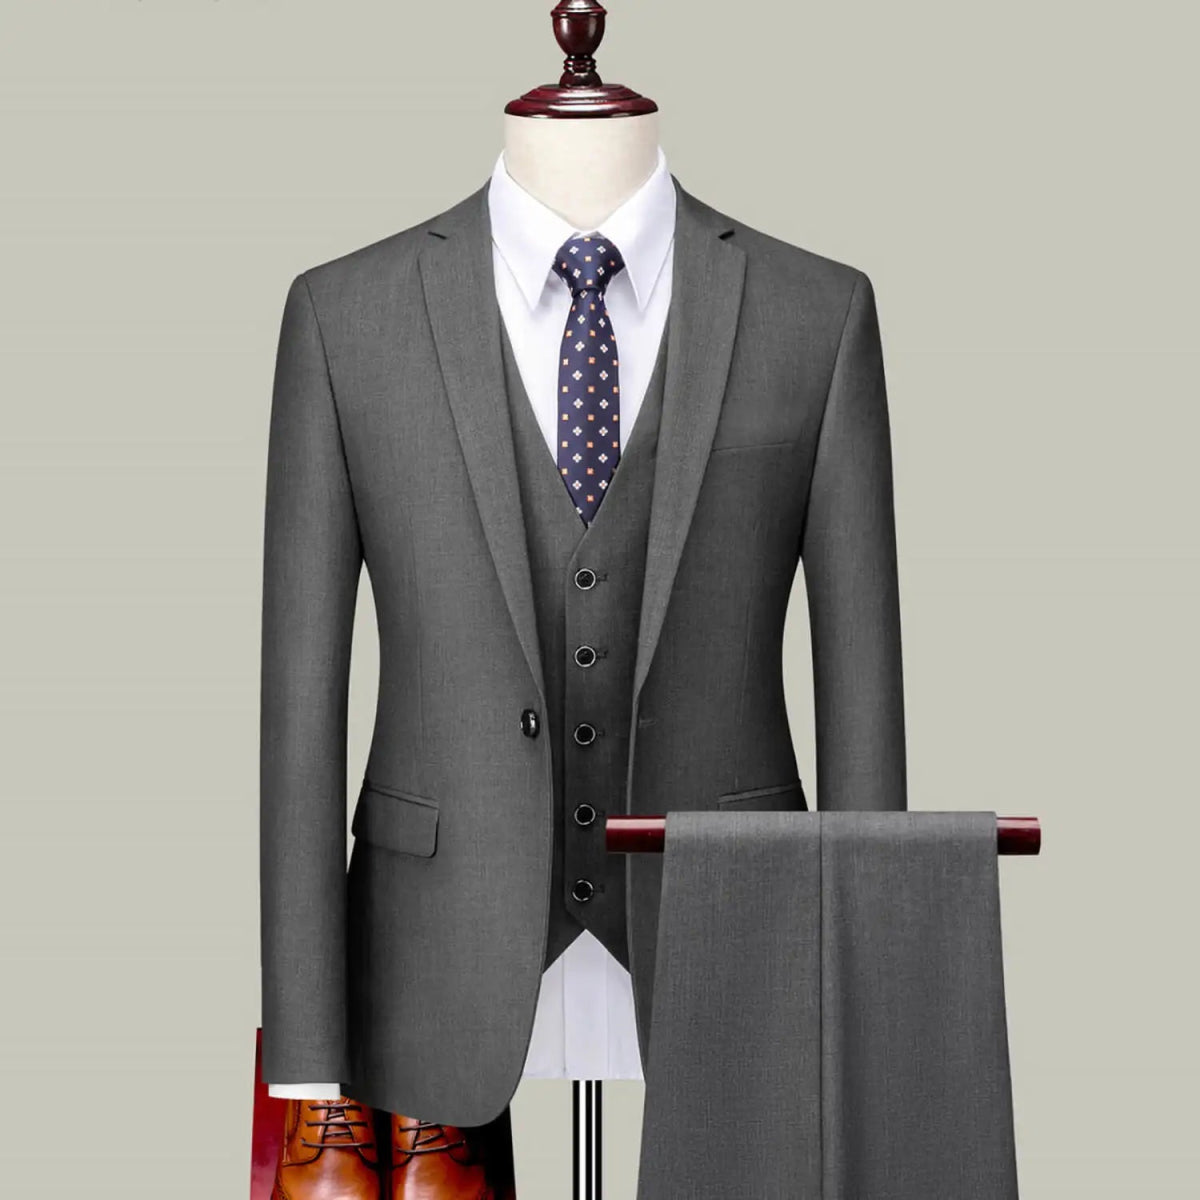 Blakonik | Elegant Three-Piece Slim-Fit Suit Set for Men - Polyester Blend - Ideal for Business, Weddings, and Formal Events - Mens 3 Piece Suit